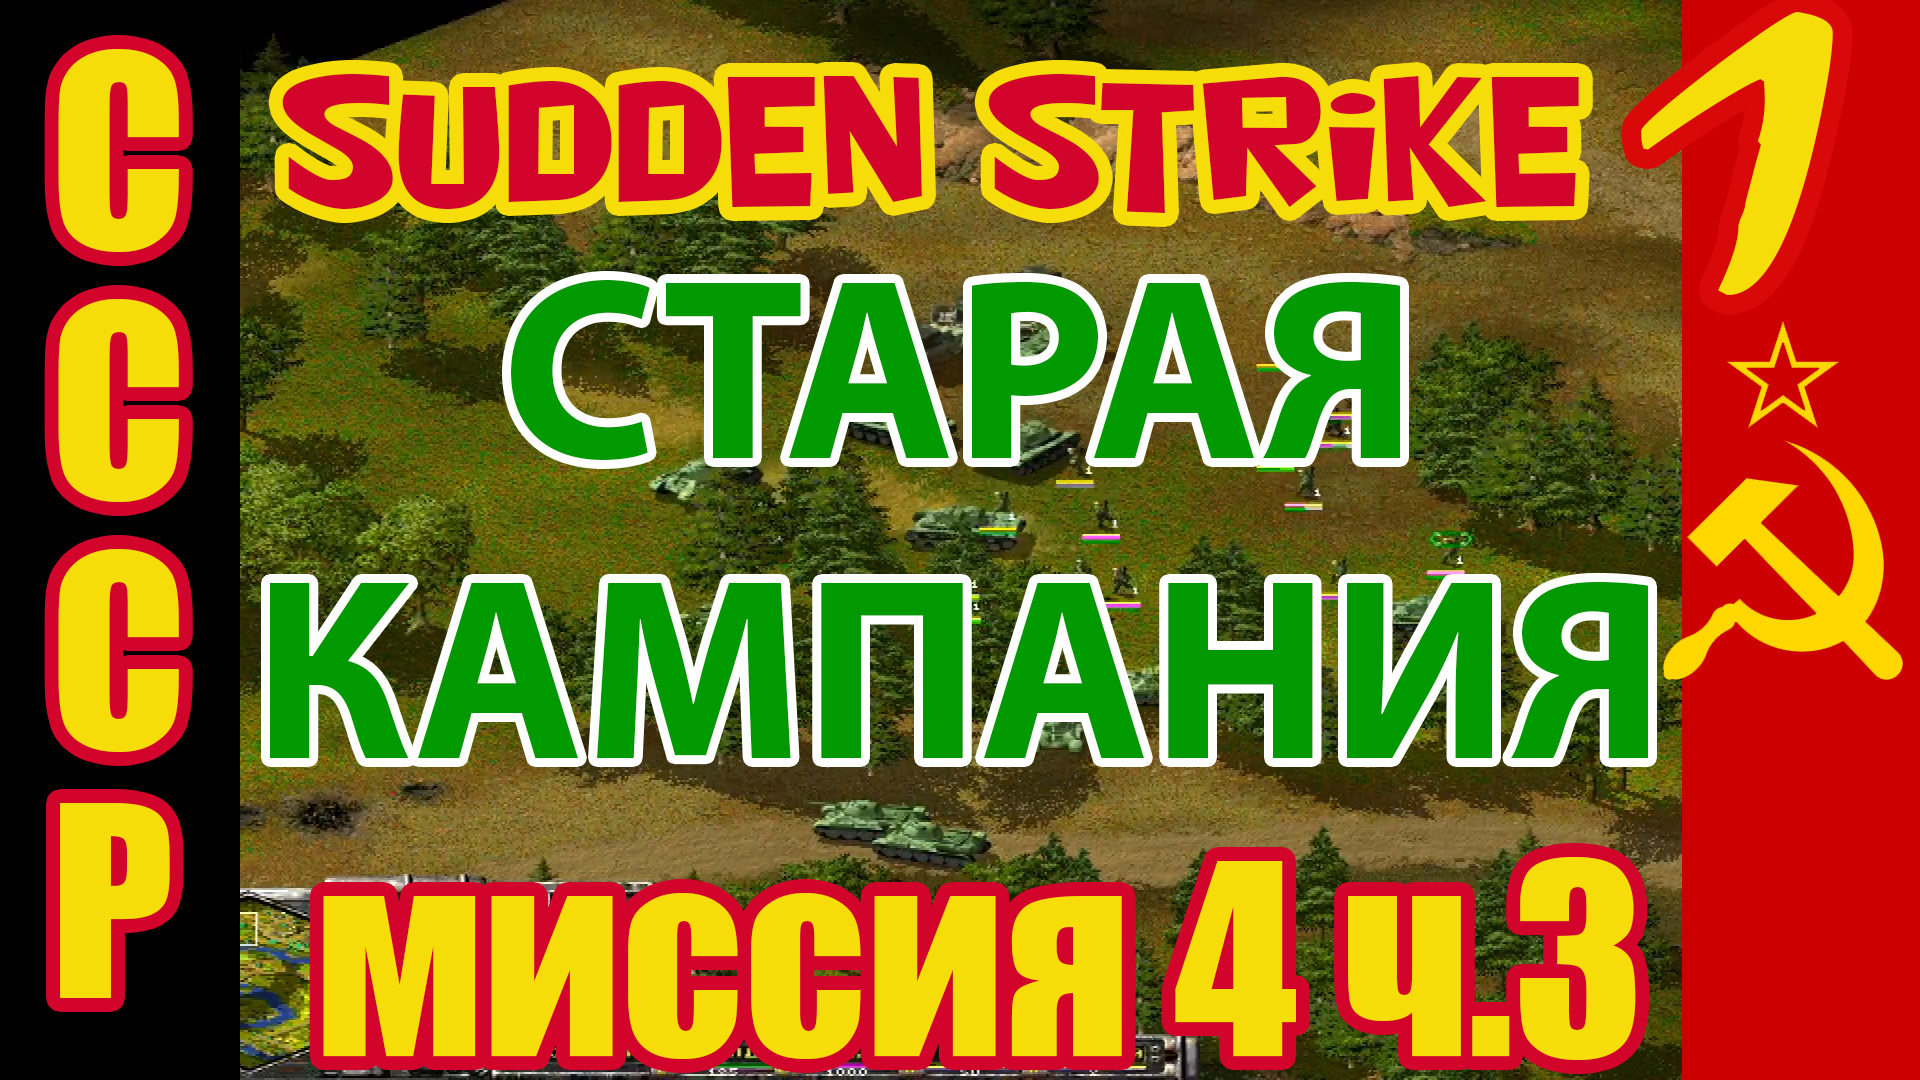 Противостояние 3 [Sudden Strike] прохождение кампания за СССР (Миссия №4  Ельня ) #3